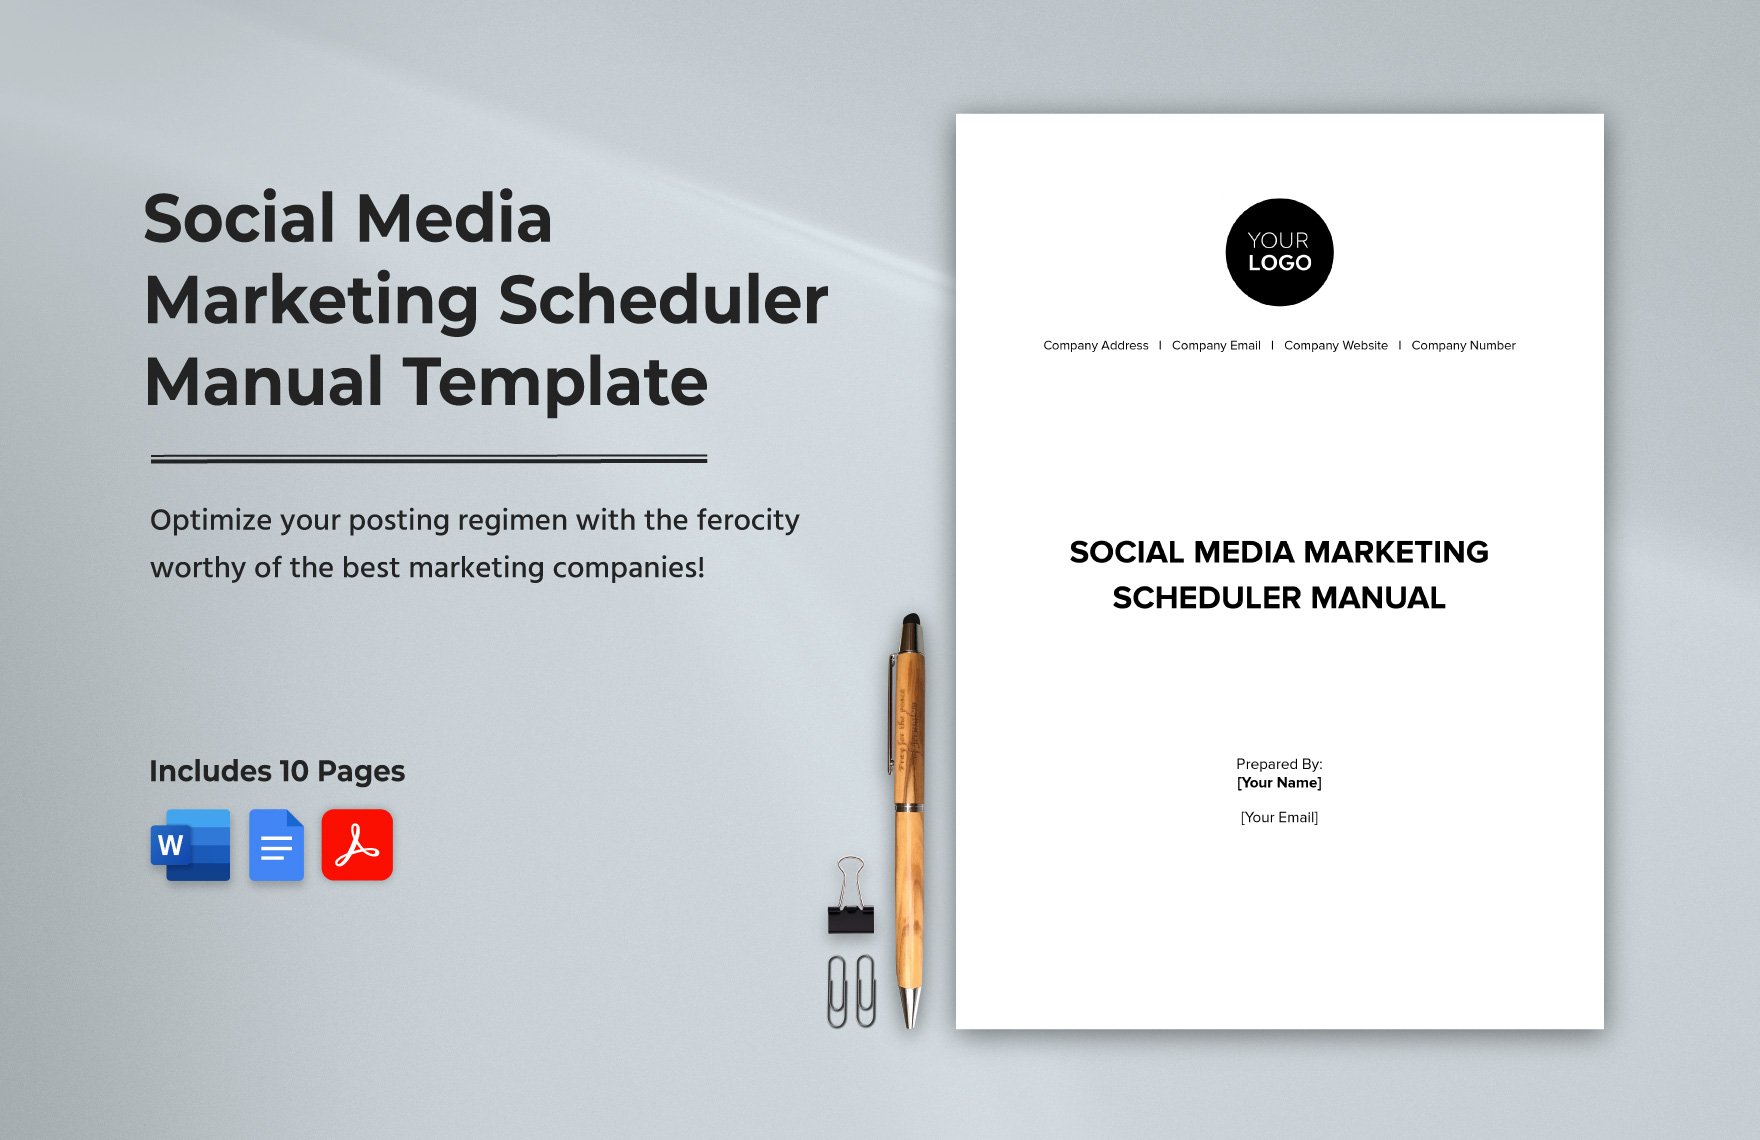 Social Media Marketing Scheduler Manual Template in Word, Google Docs, PDF